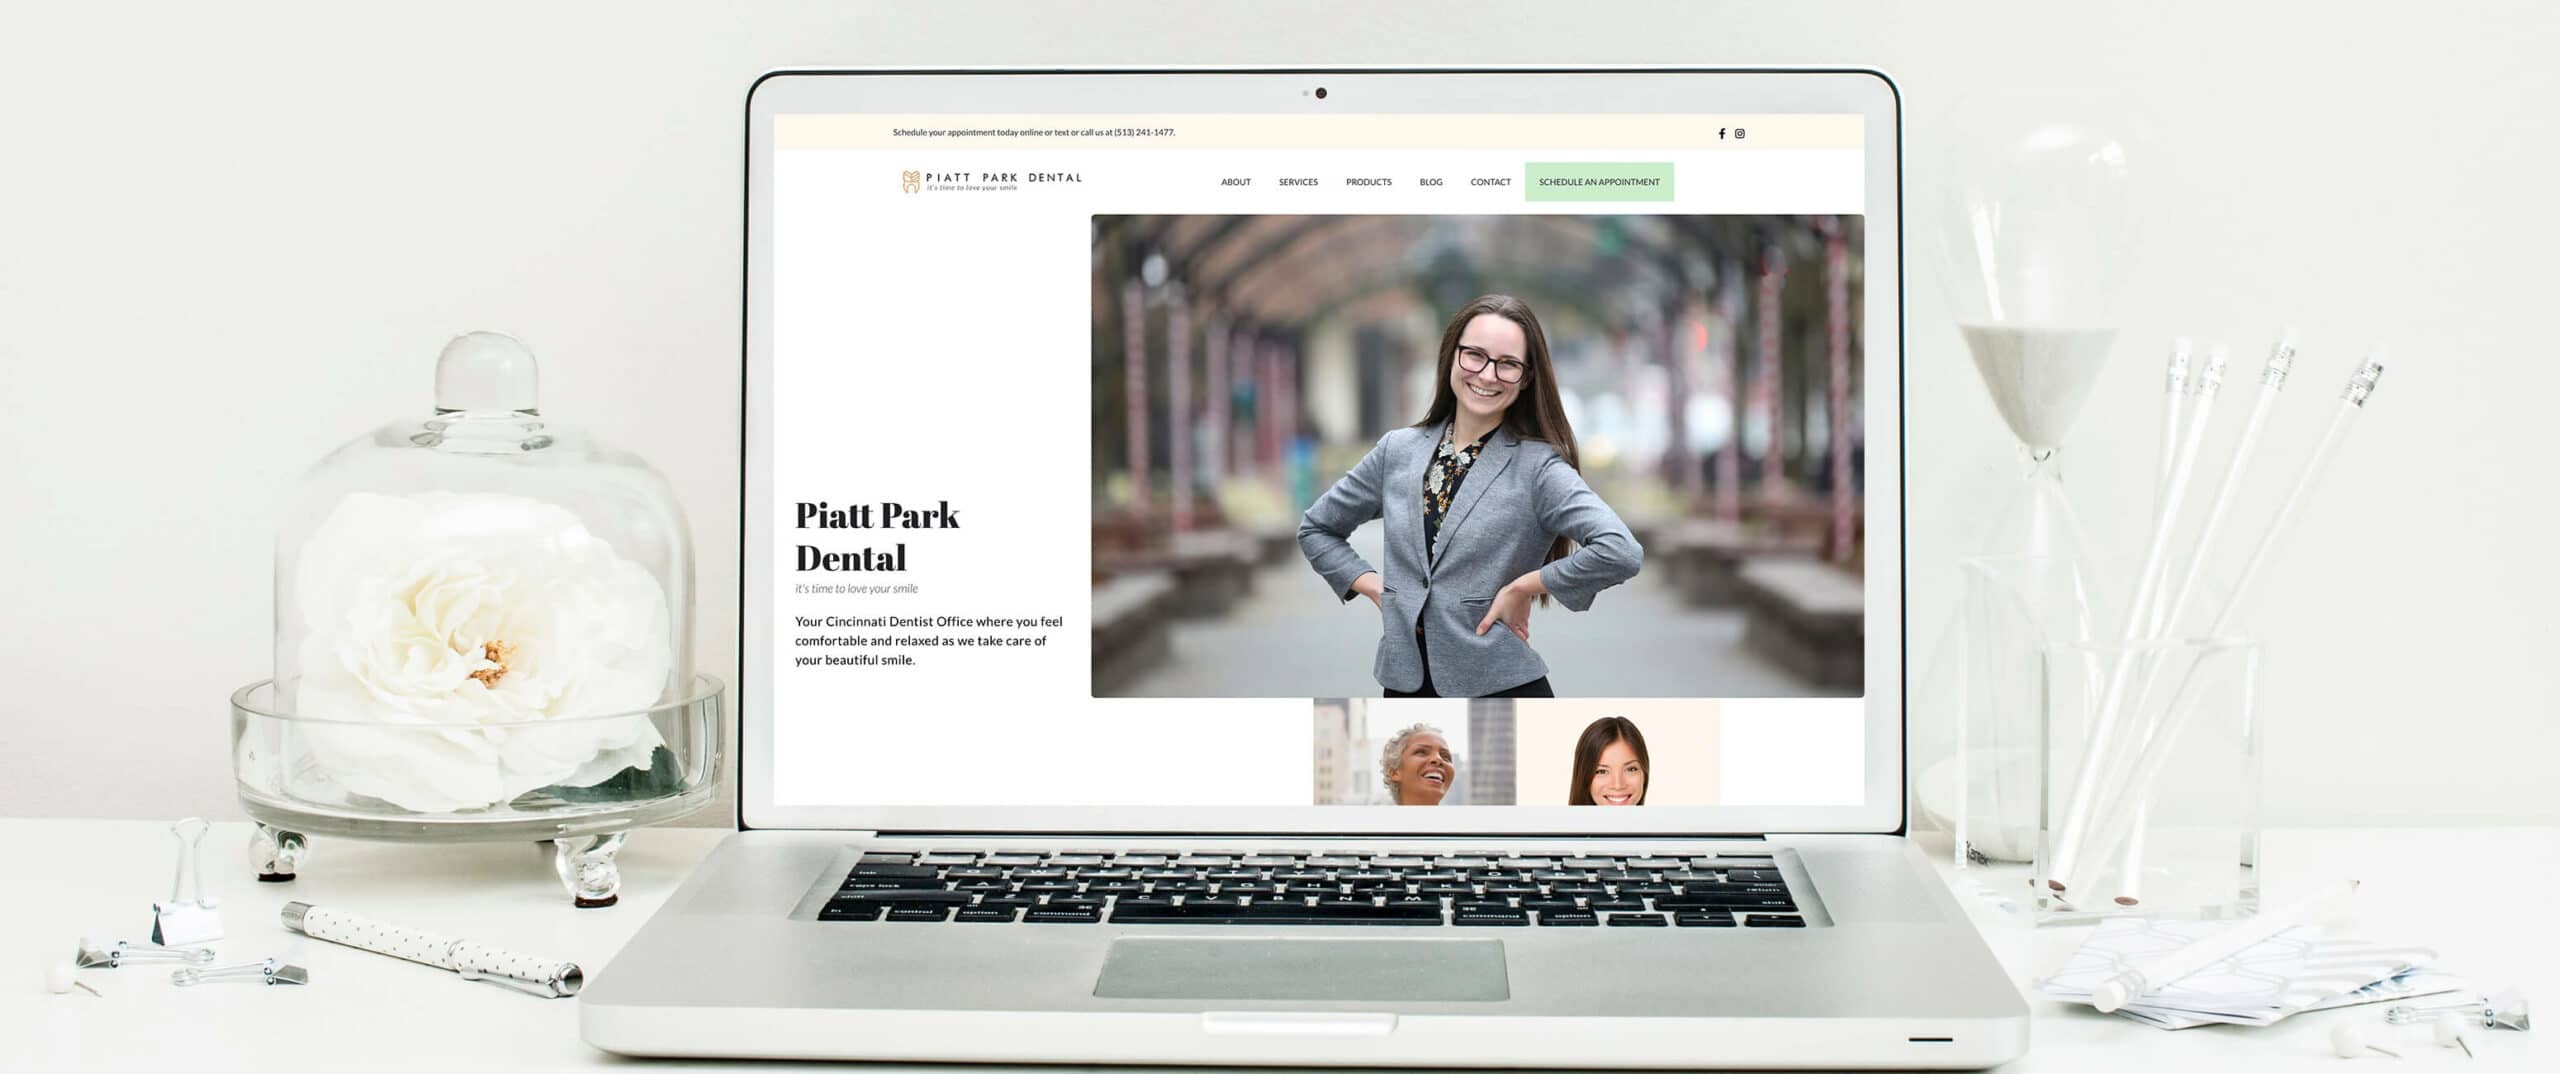 Piatt Park Dental Home page design - Cincinnati Dentist Office Website Design